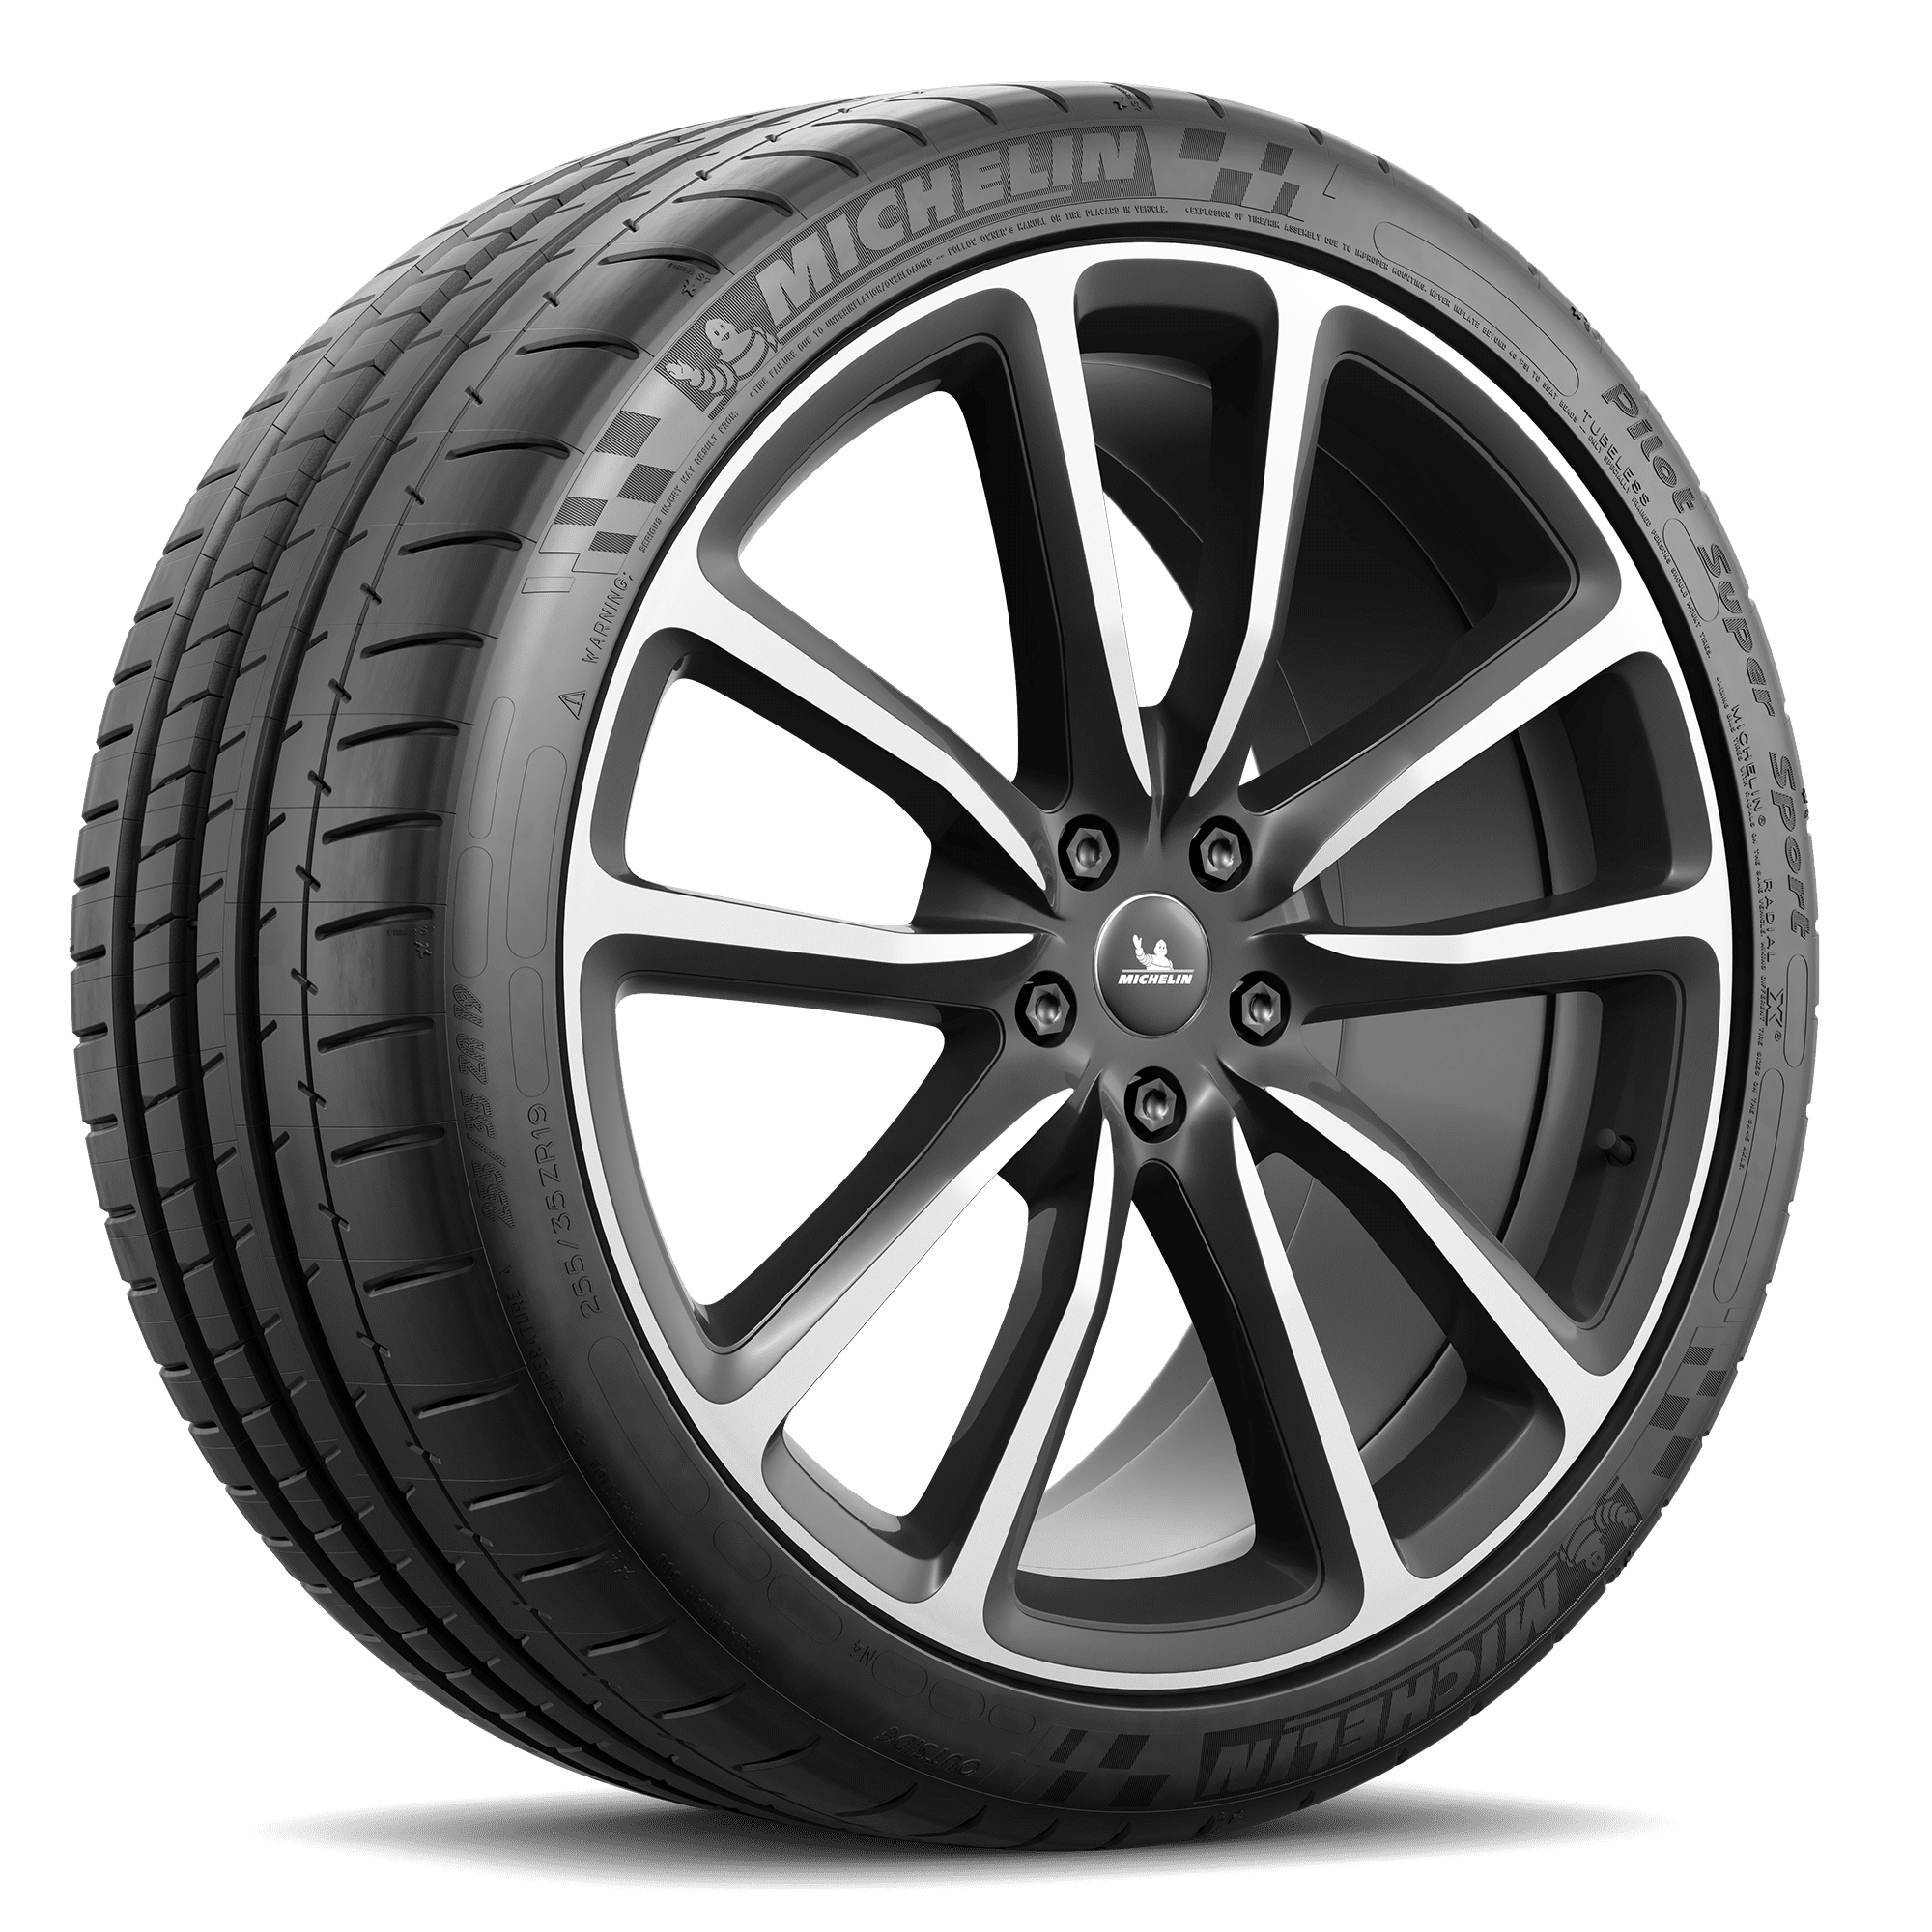 Michelin Pilot Super Sport Summer 255/35ZR19/XL (96Y) Tire